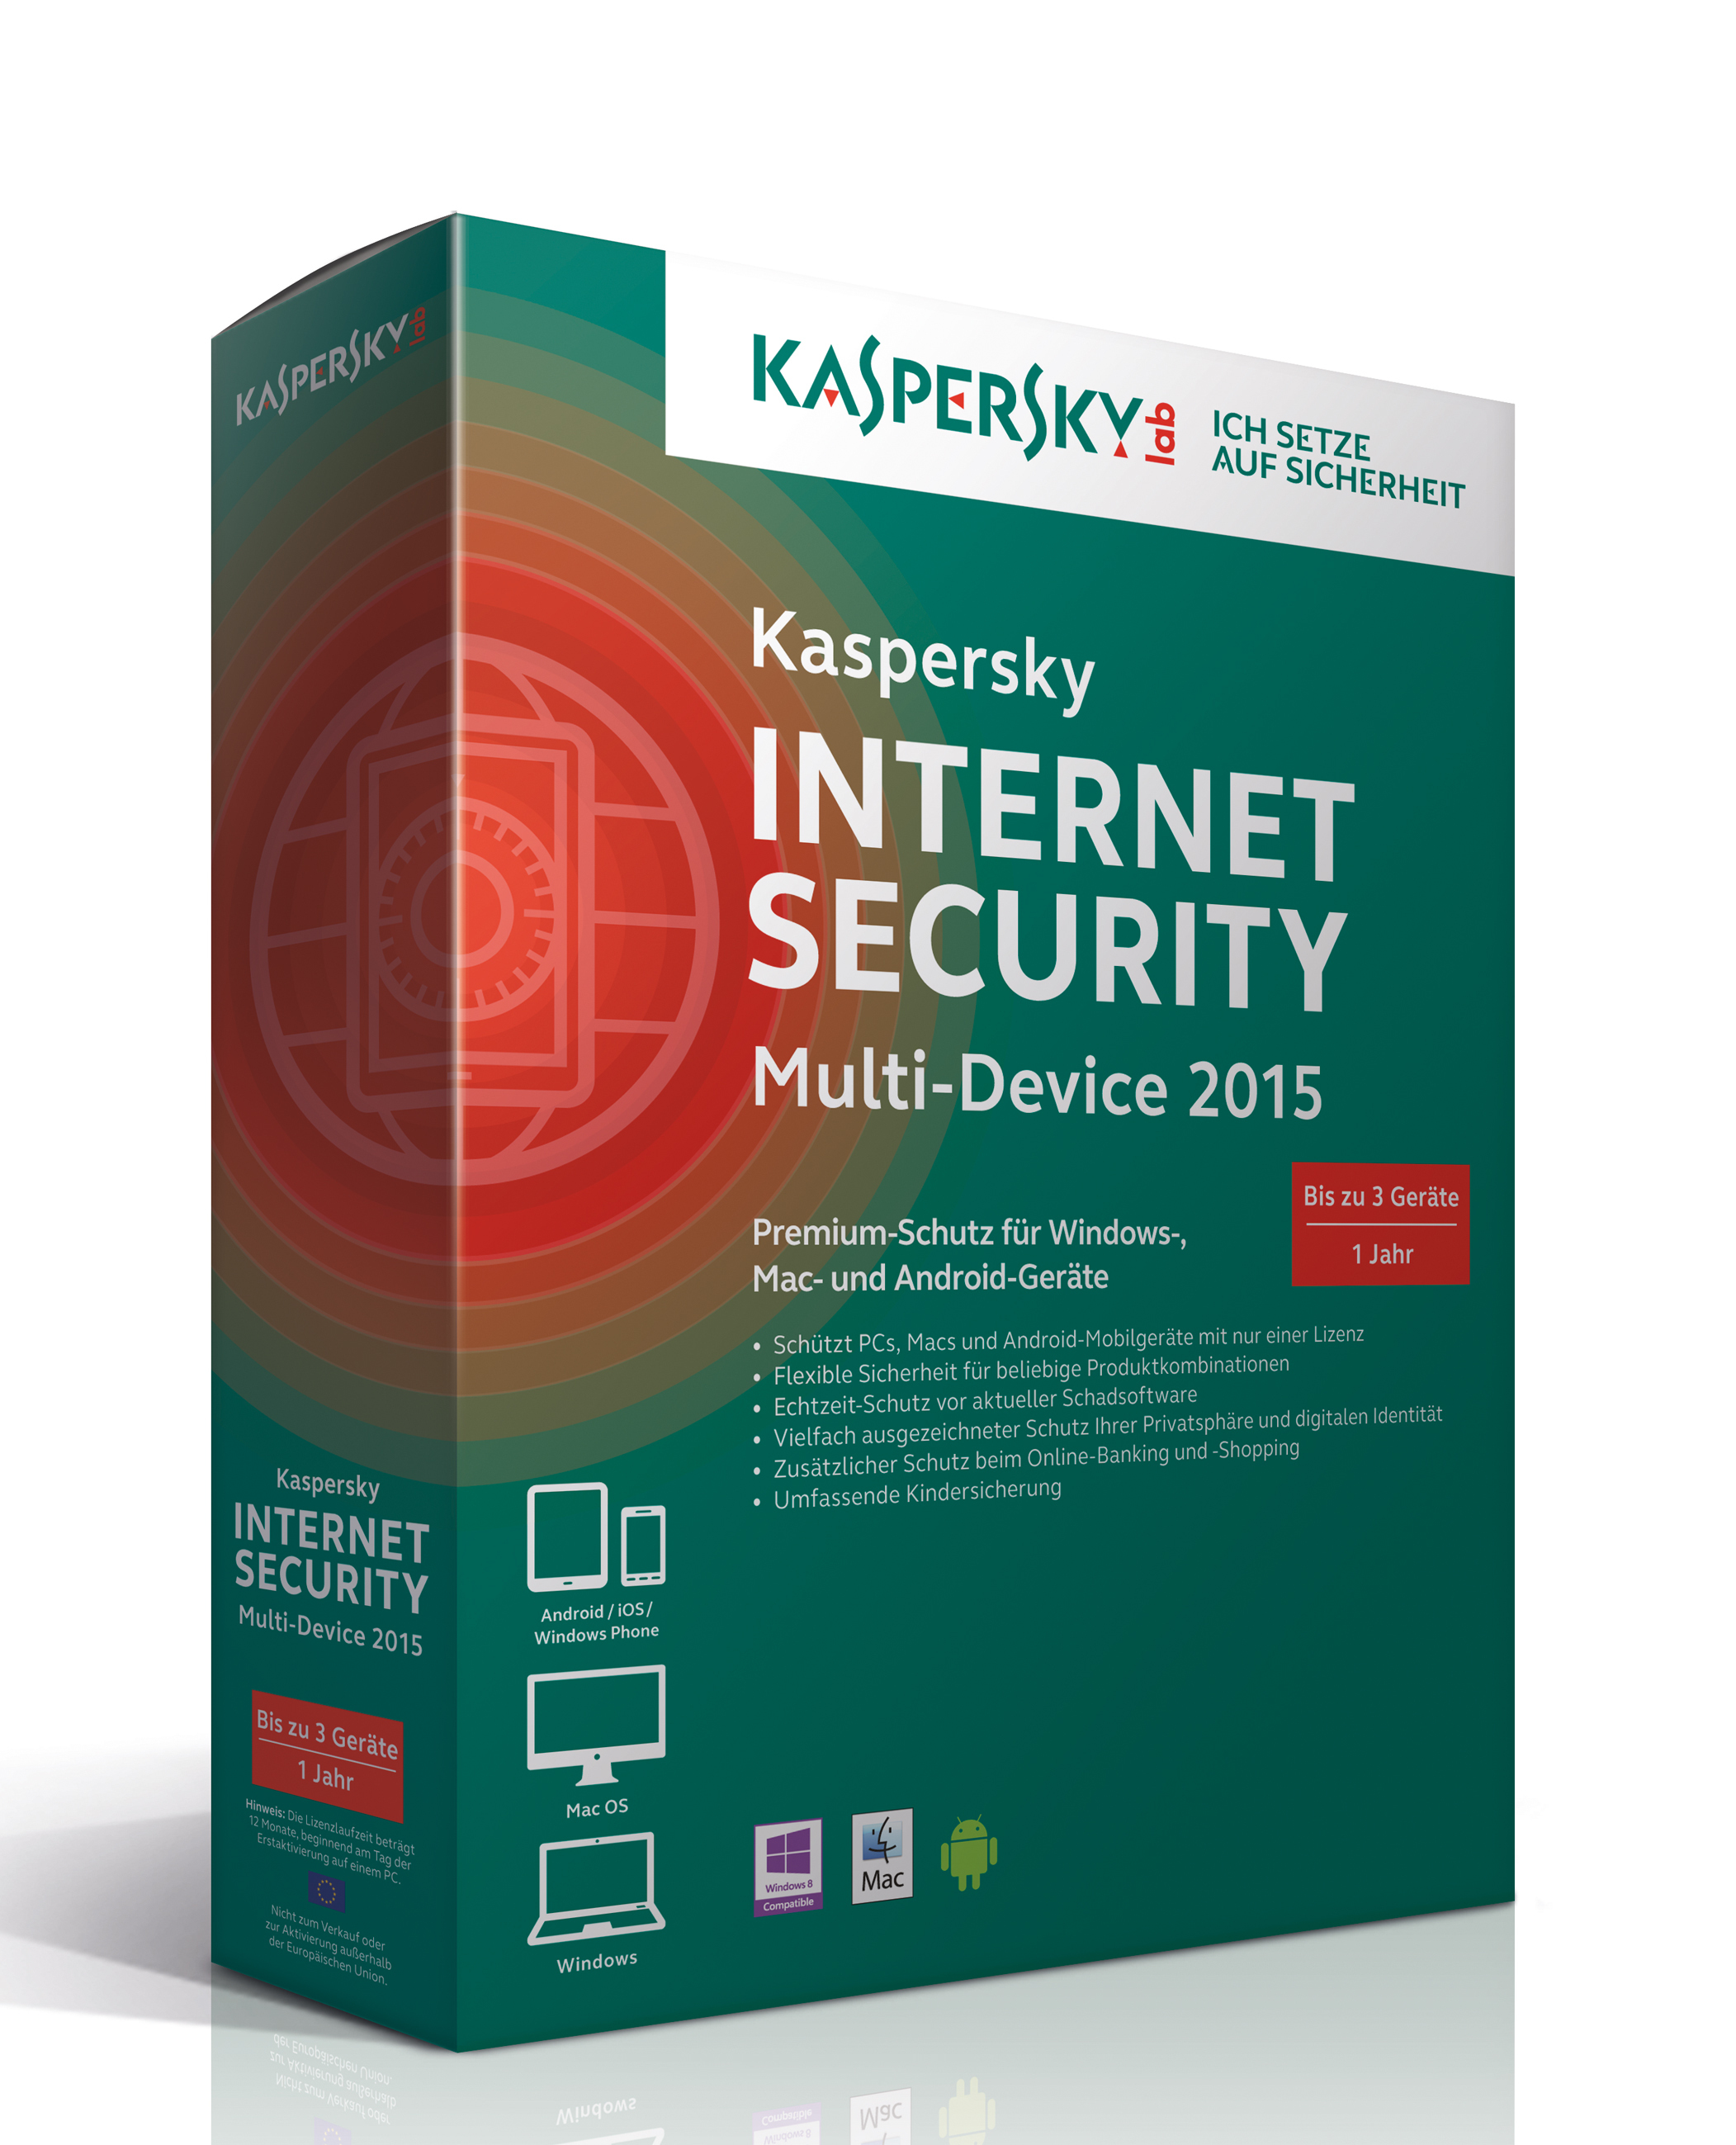 Kaspersky Internet Security 2015, Multi-Device